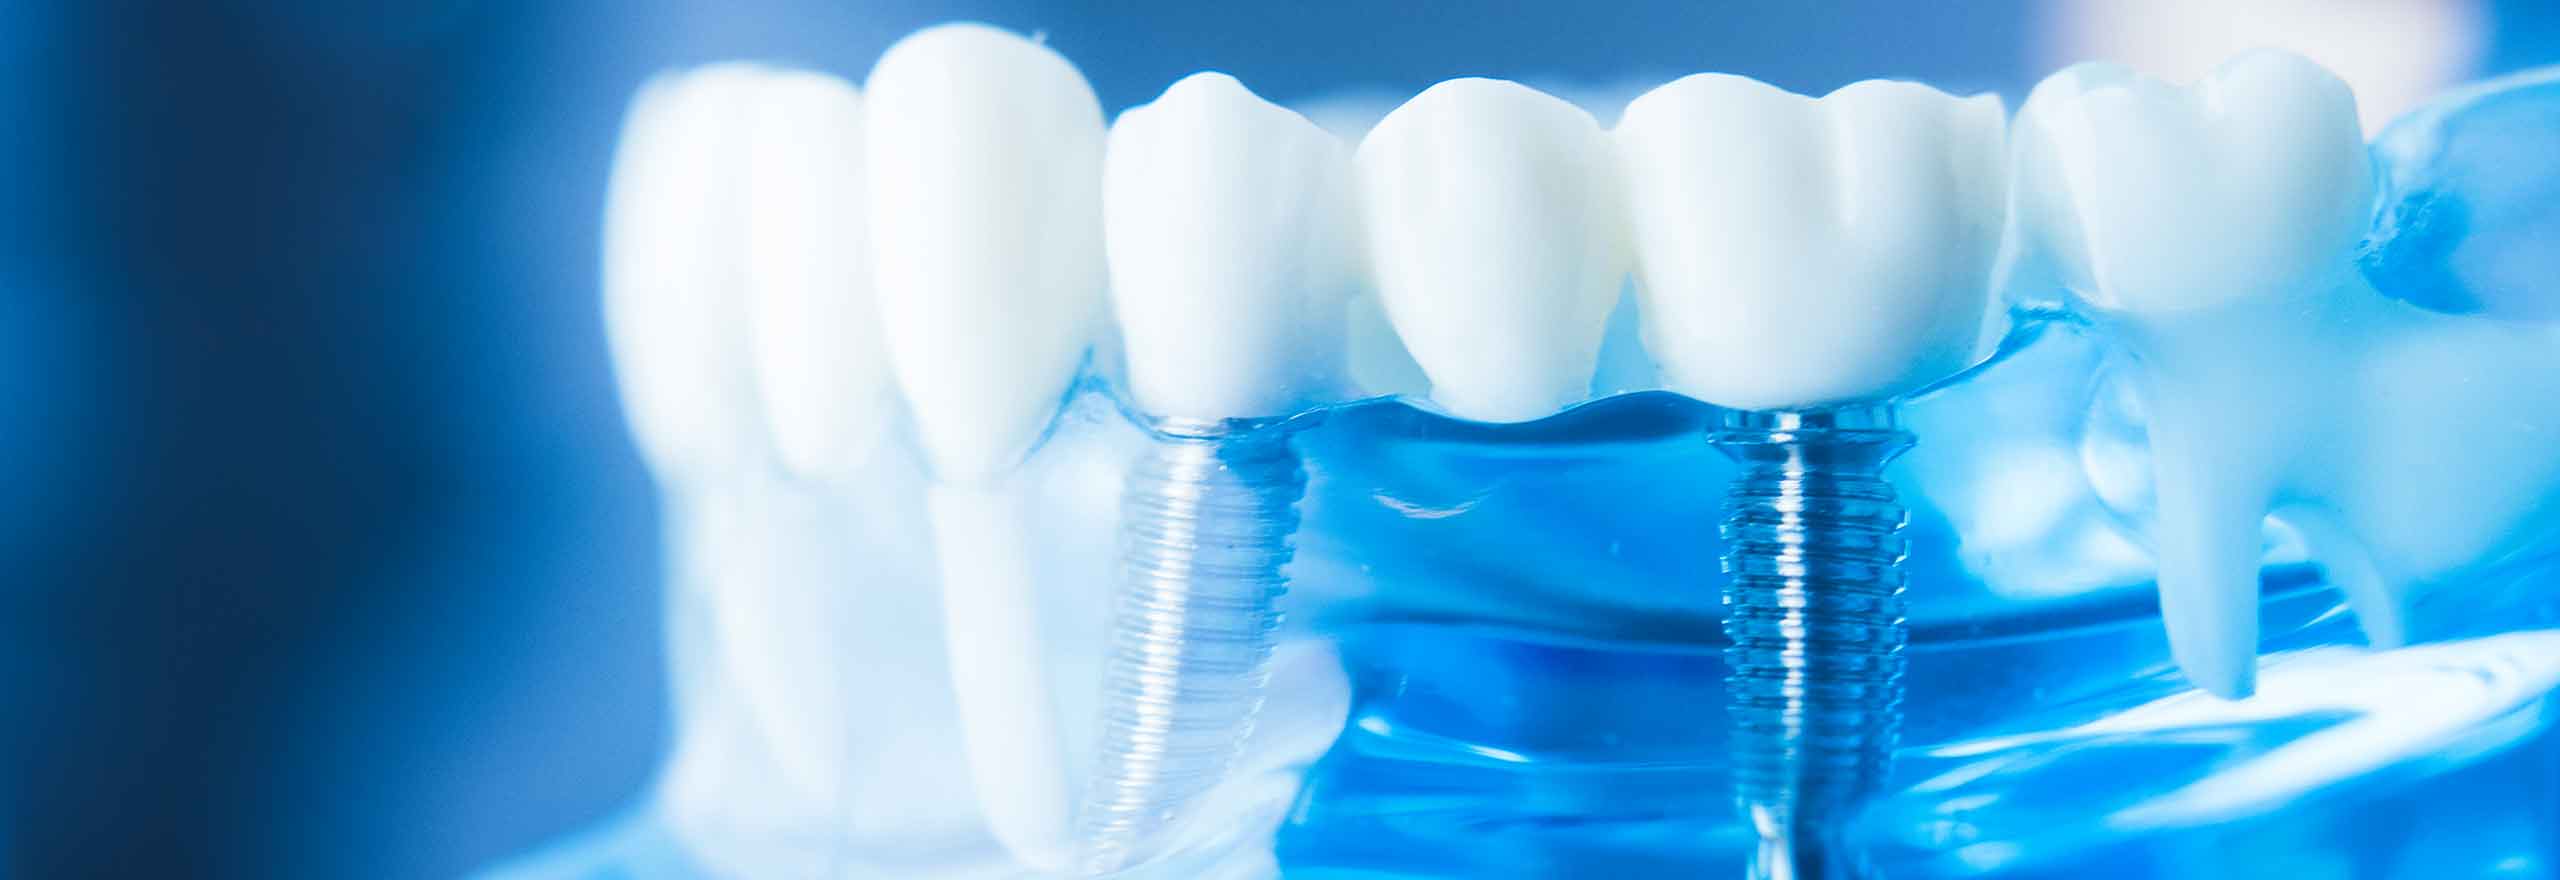 Implantes dentales en un modelo de enseñanza de odontología  